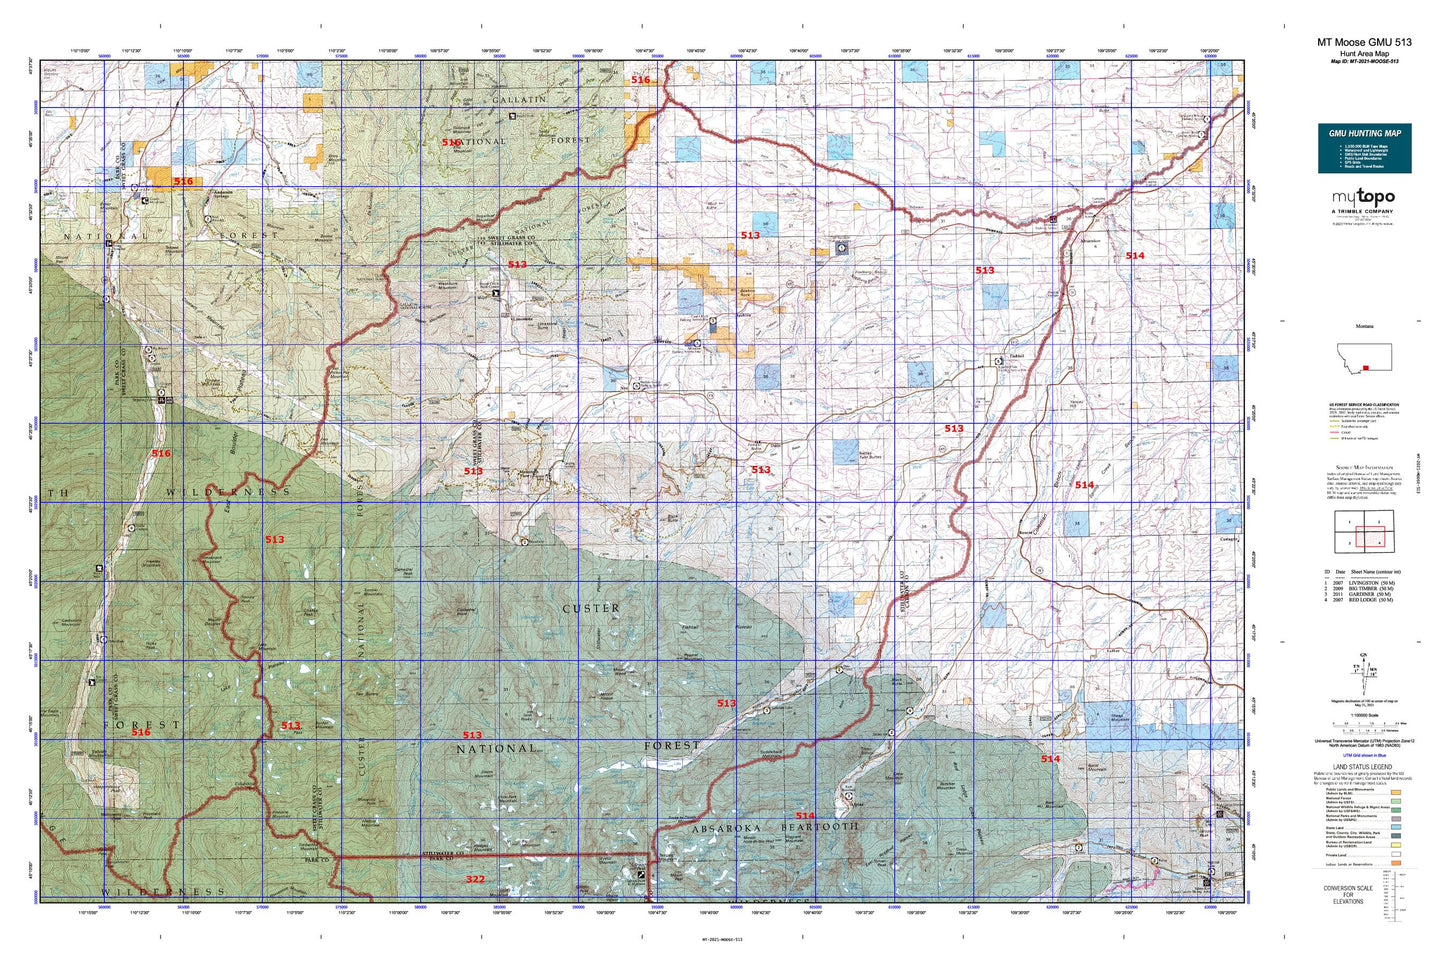 Montana Moose GMU 513 Map Image